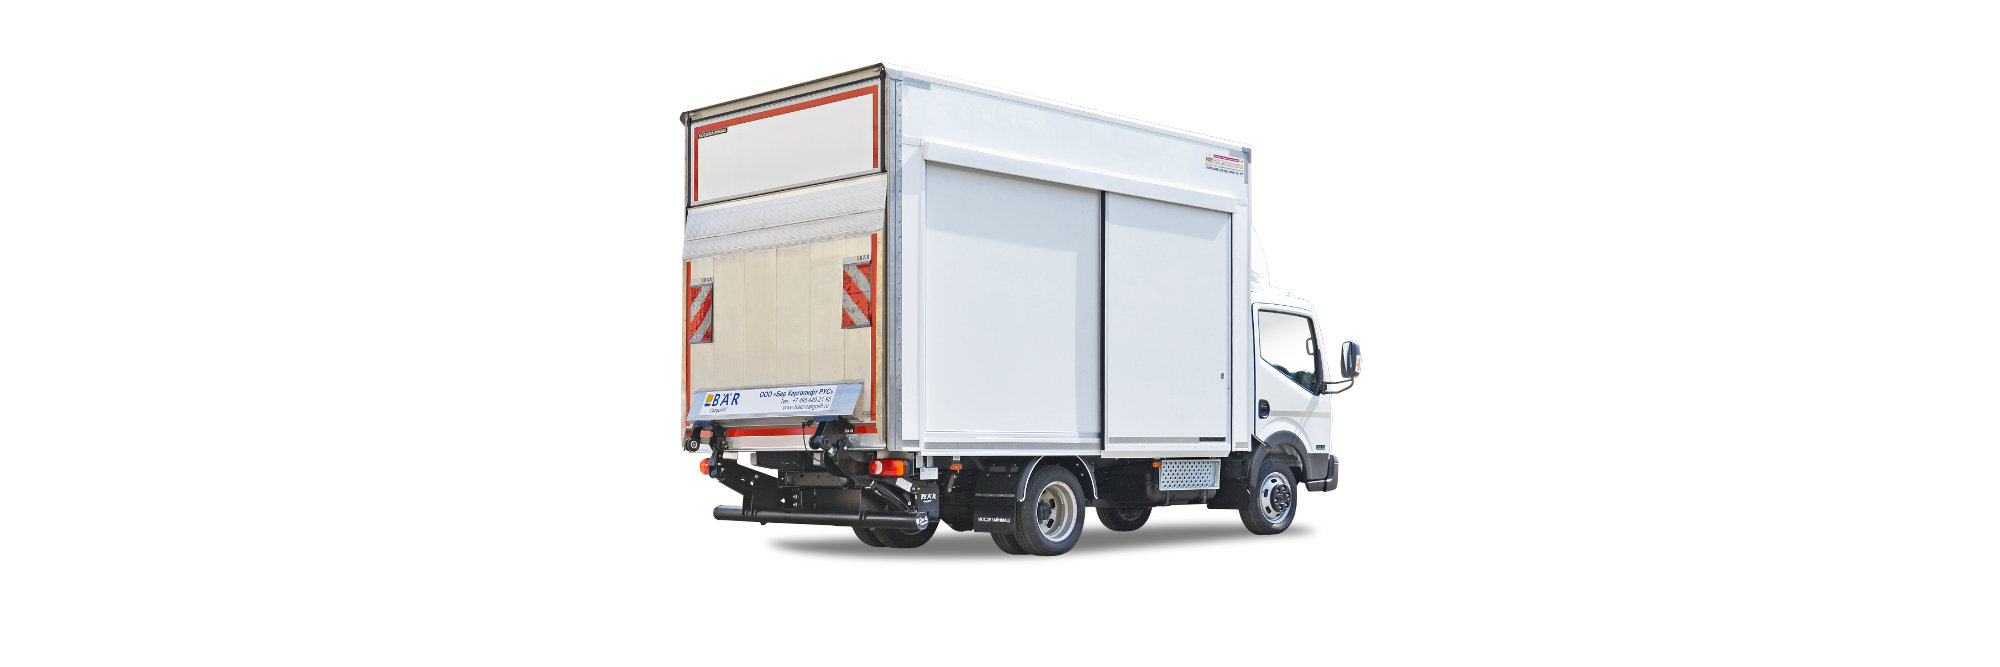 Decopan Commercial Vehicle FRP GRP laminates non-food distribution trailer, truck, van body manufacturing